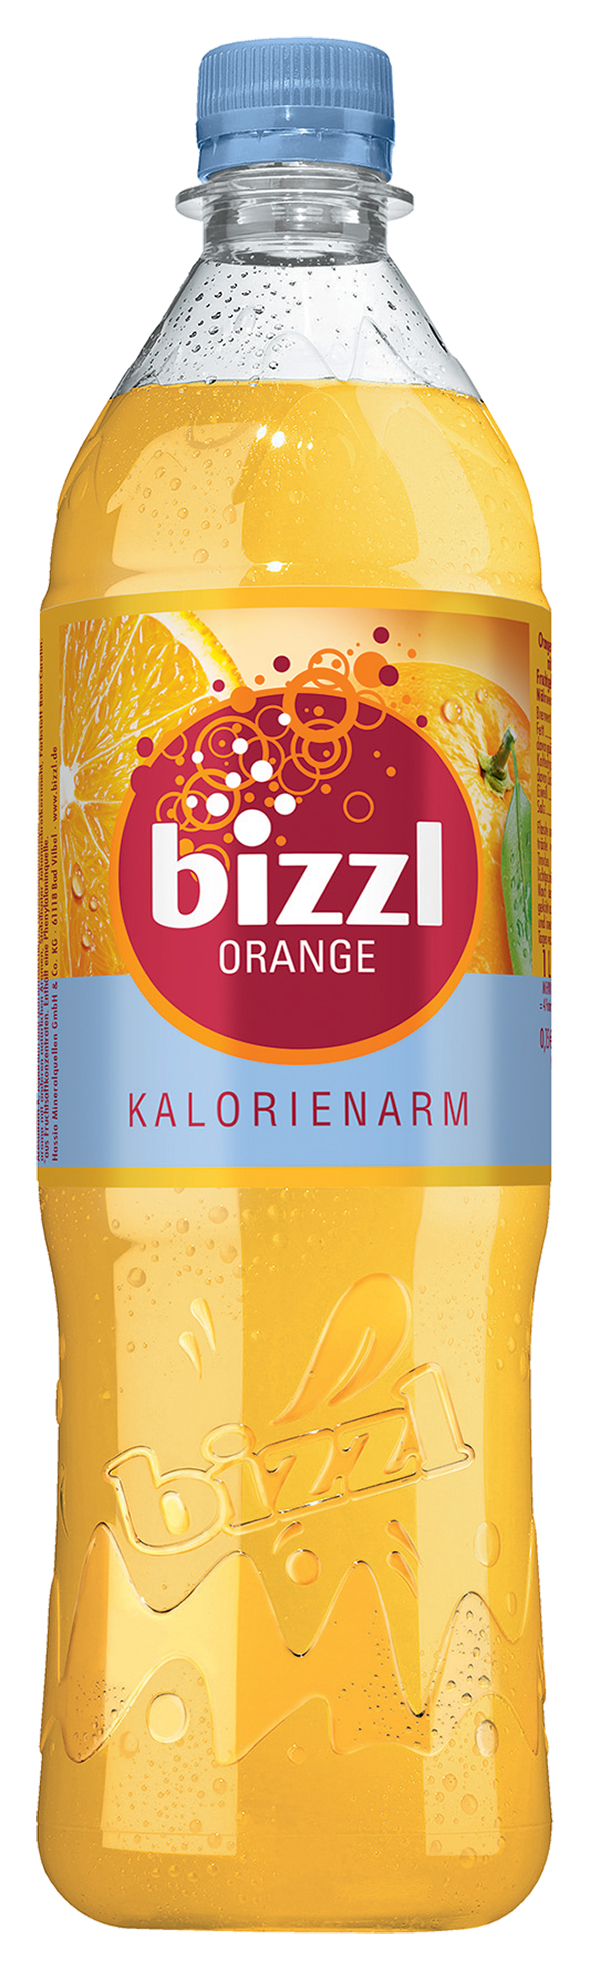 Bizzl Orange Kalorienarm 12 x 1,0 l (PET)